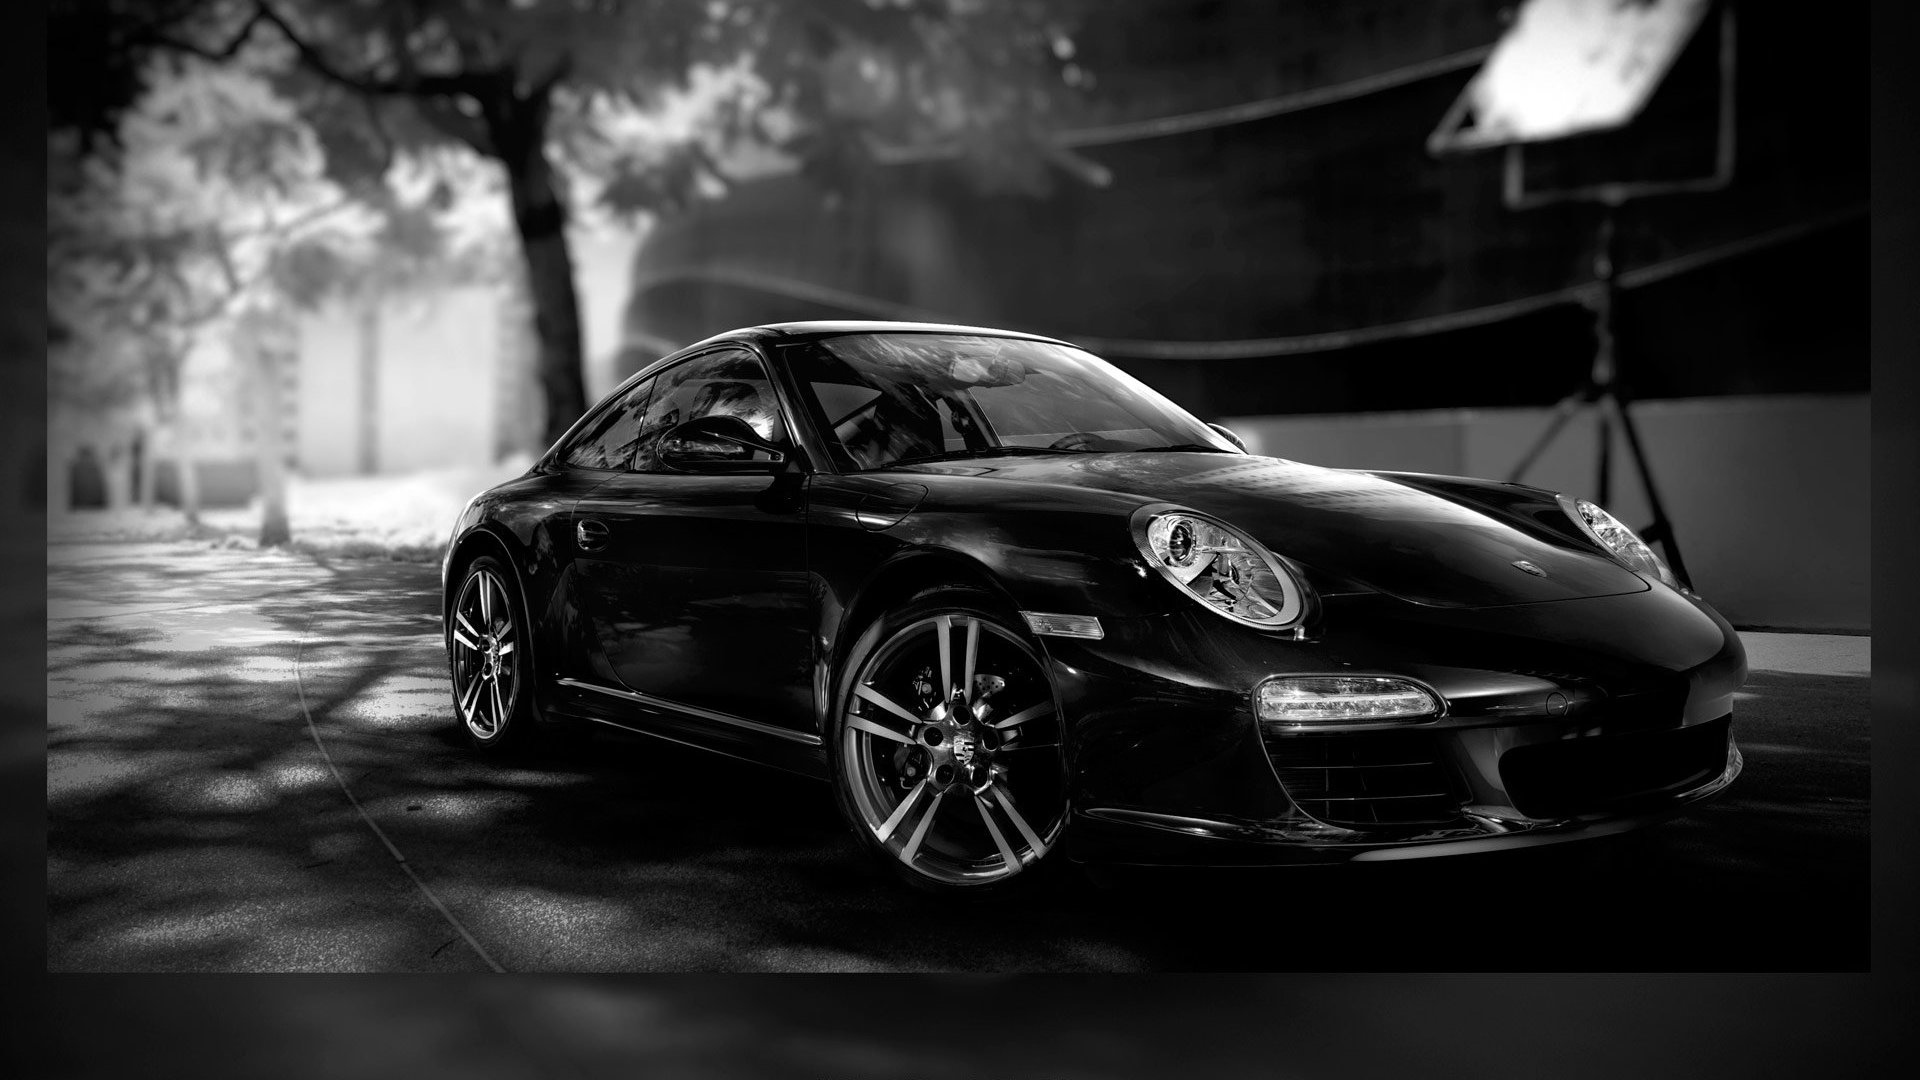 Porsche Black Edition photo contest winners